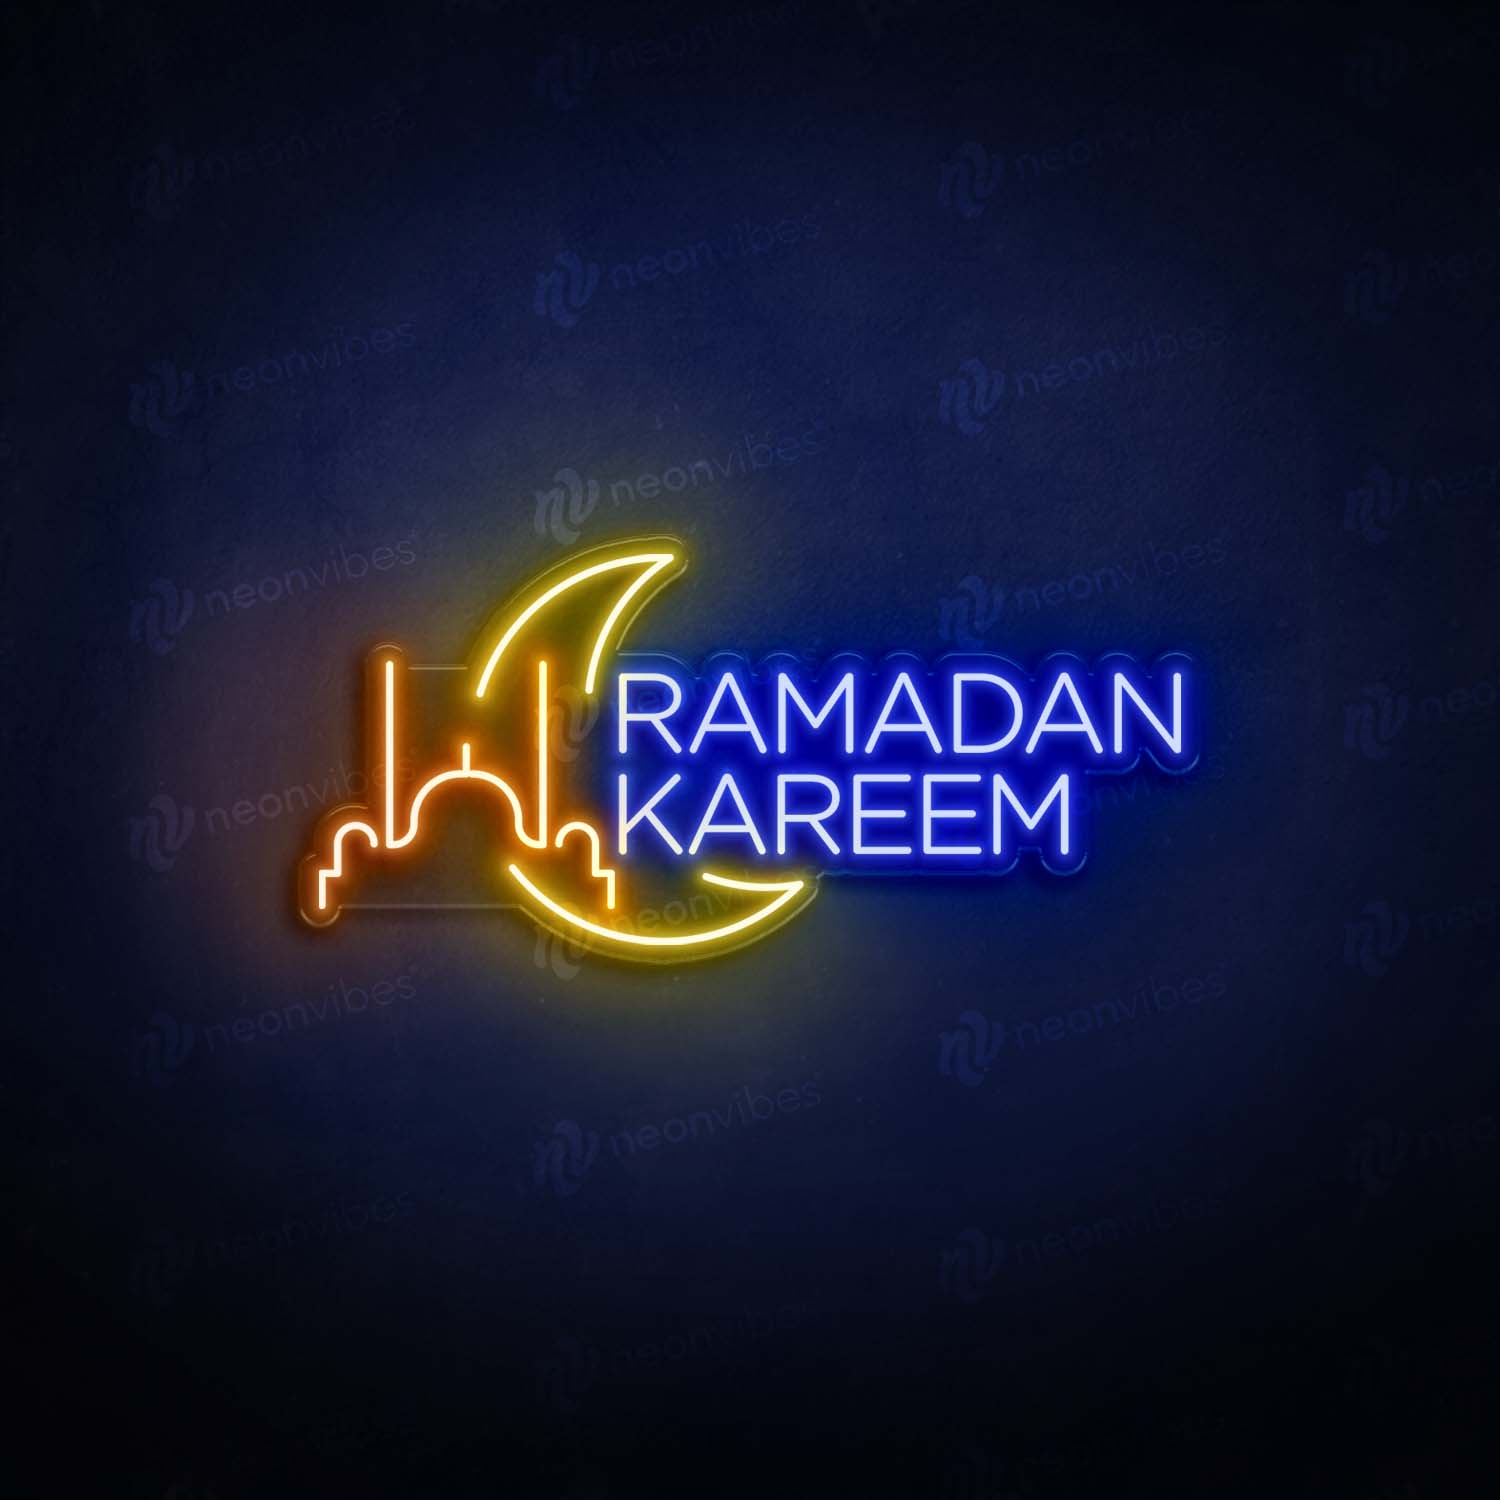 Ramadan kareem neon sign